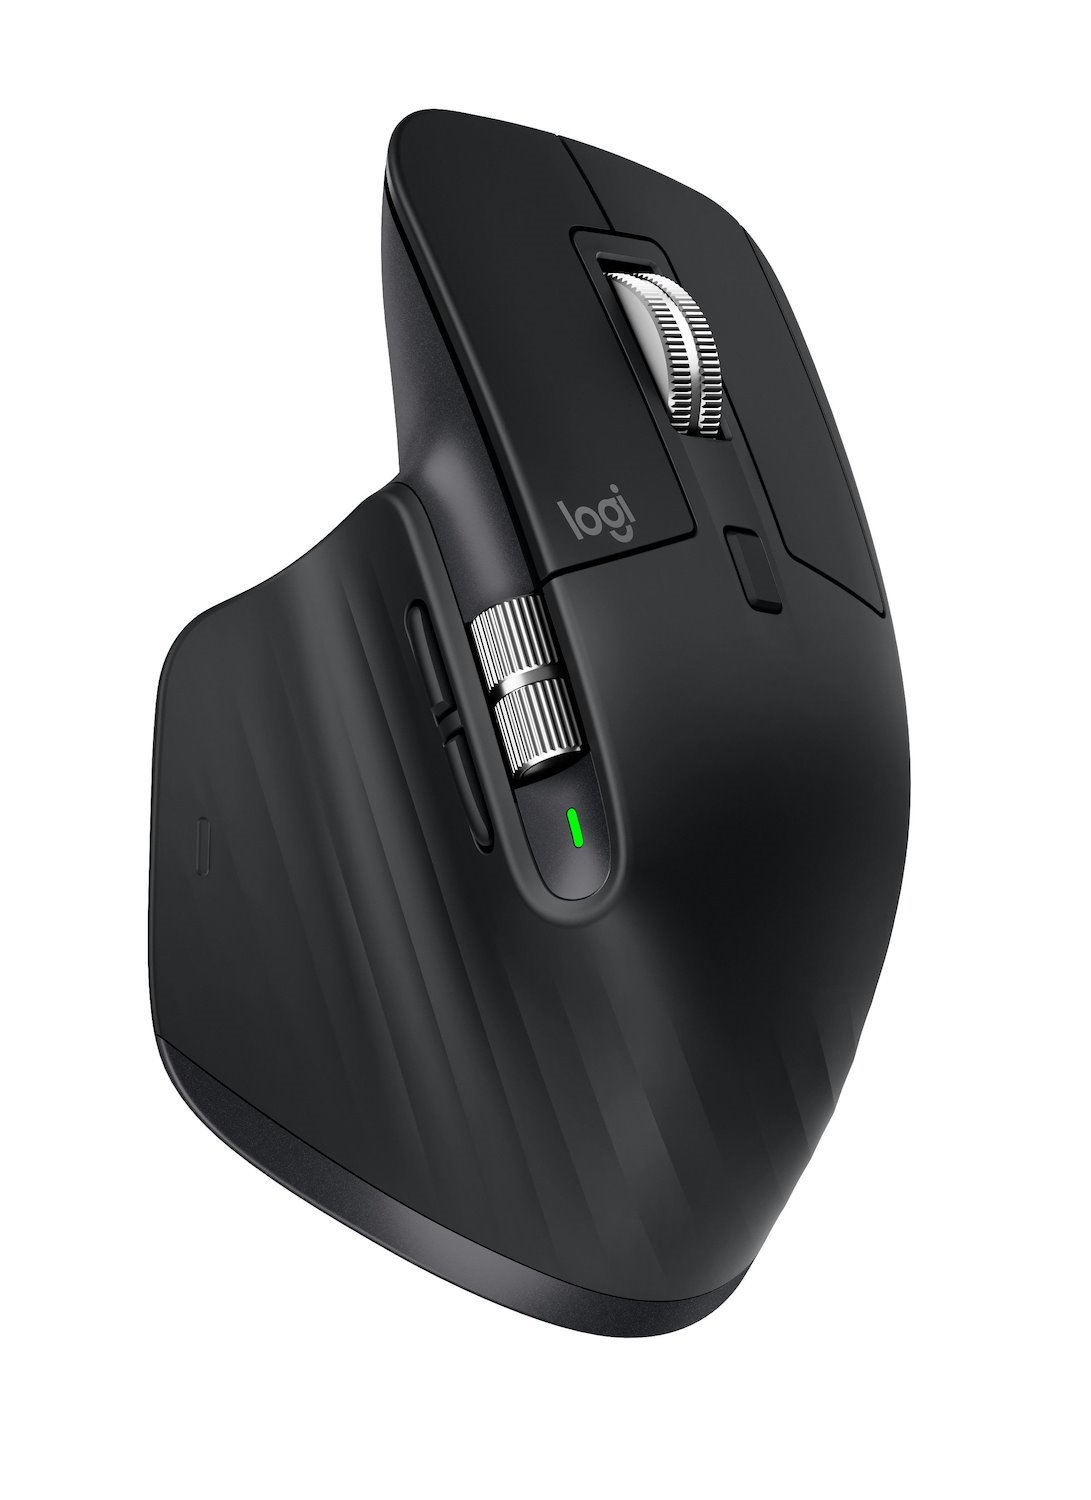 Logitech MX Master 3 Mouse - Bluetooth/Radio Frequency - USB - Darkfield - 7 Button(s) - Black